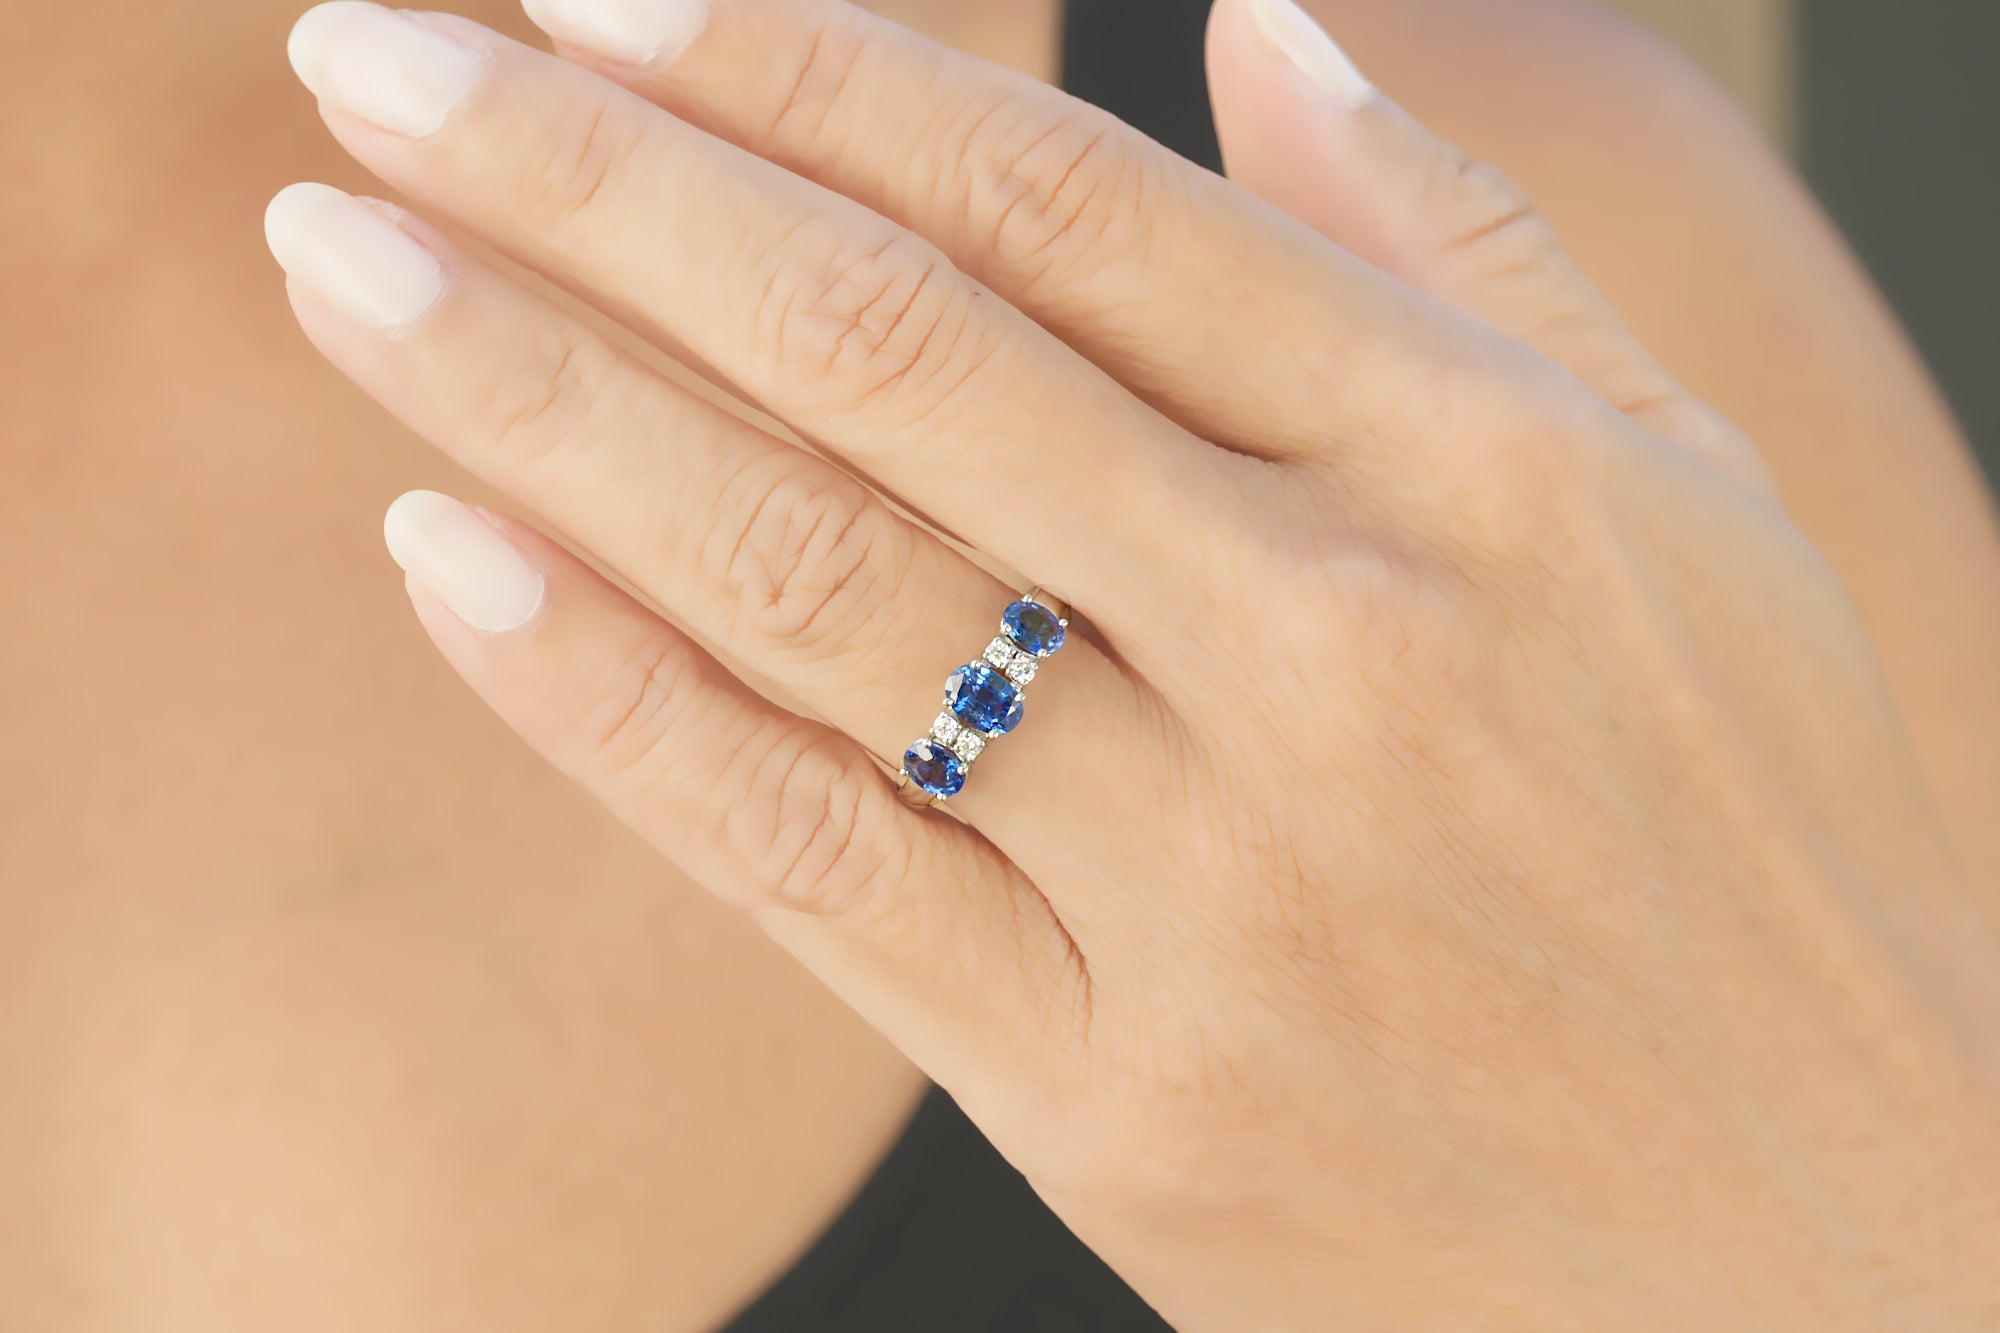 The Panya Oval Sapphire Ring